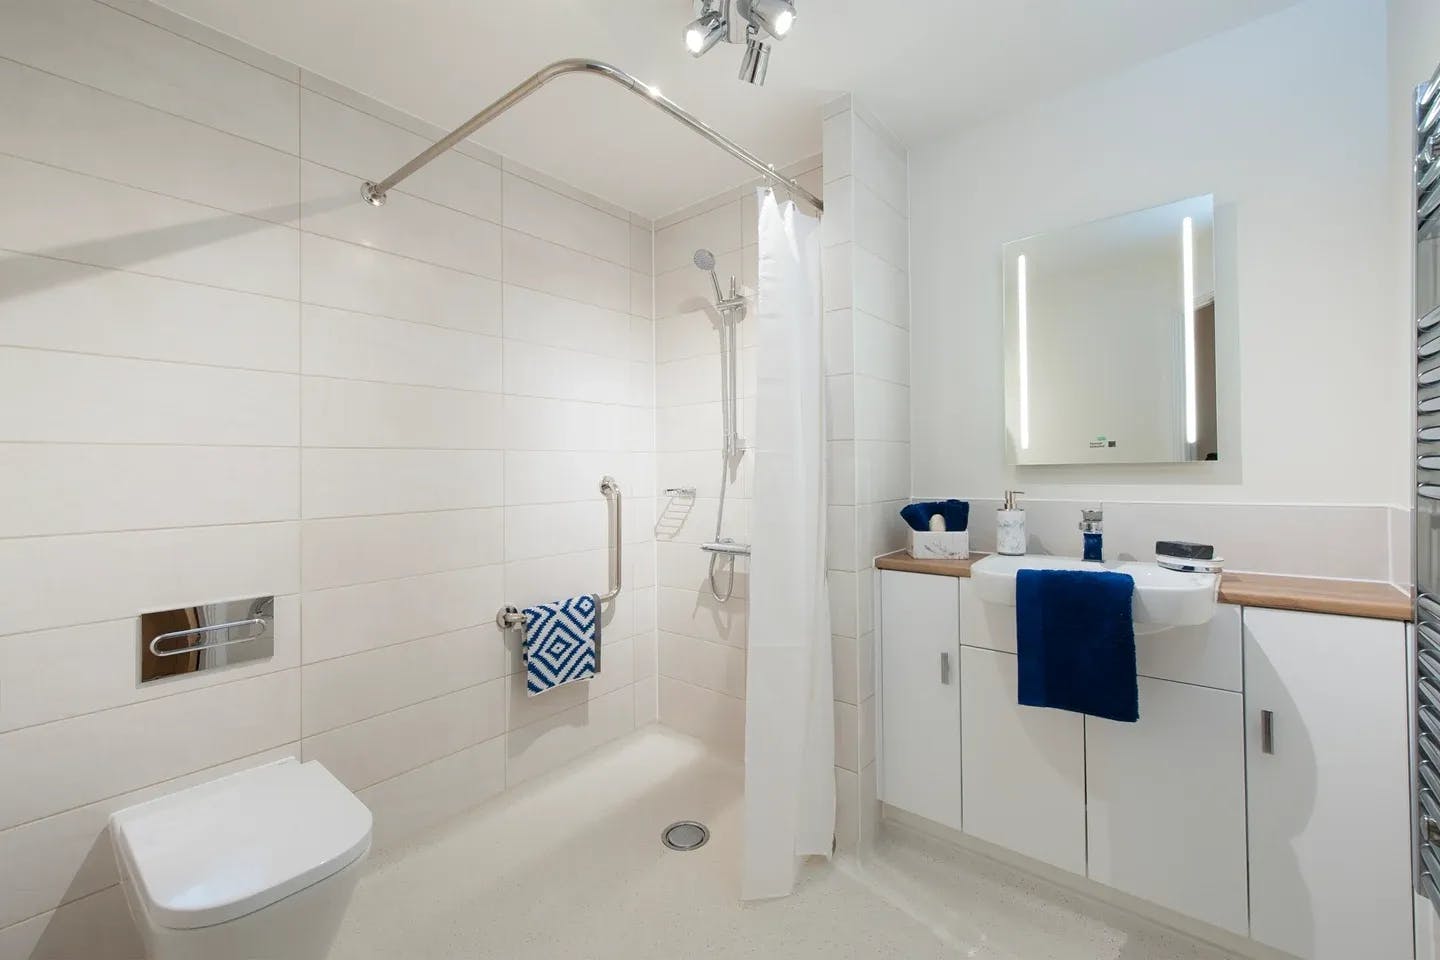 Bathroom at William House Retirement Apartment in Thatcham, West Berkshire